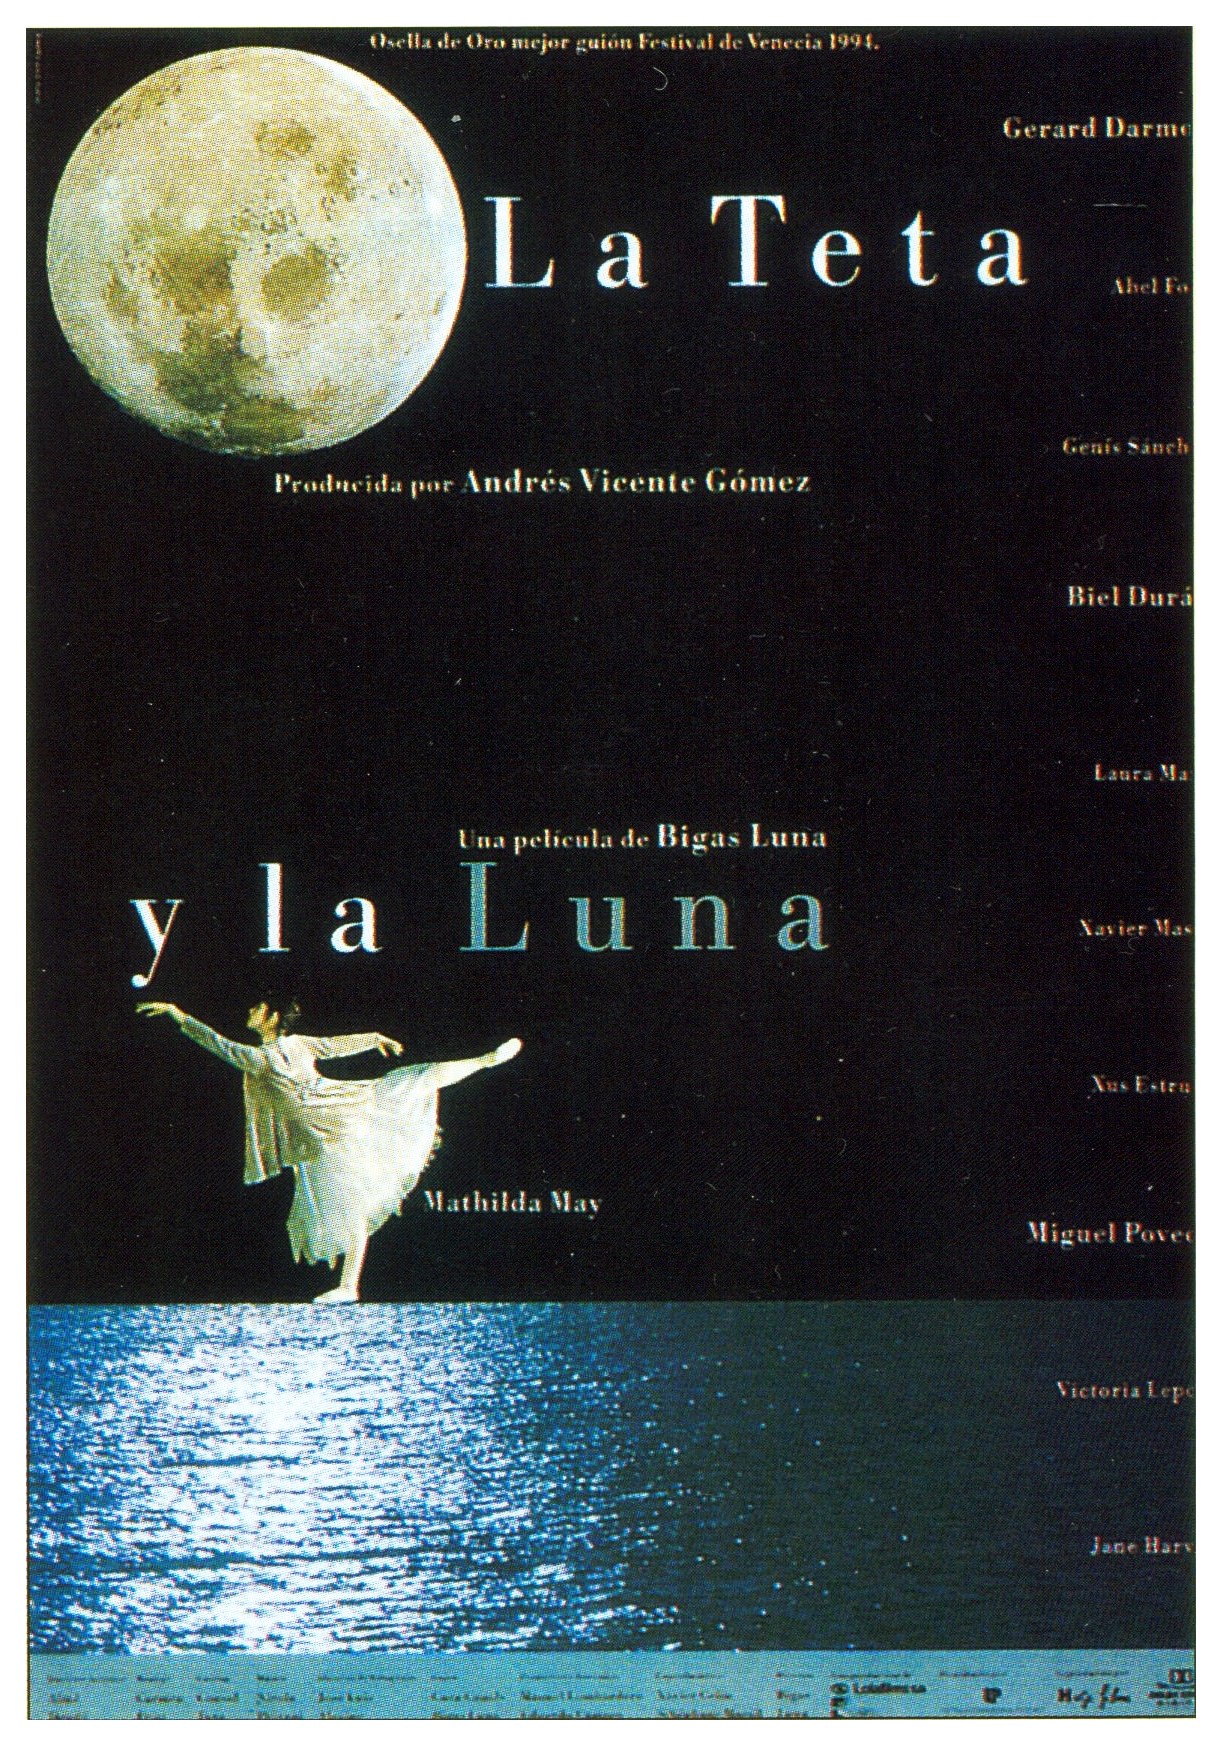 Mathilda May در صحنه فیلم سینمایی La teta y la luna